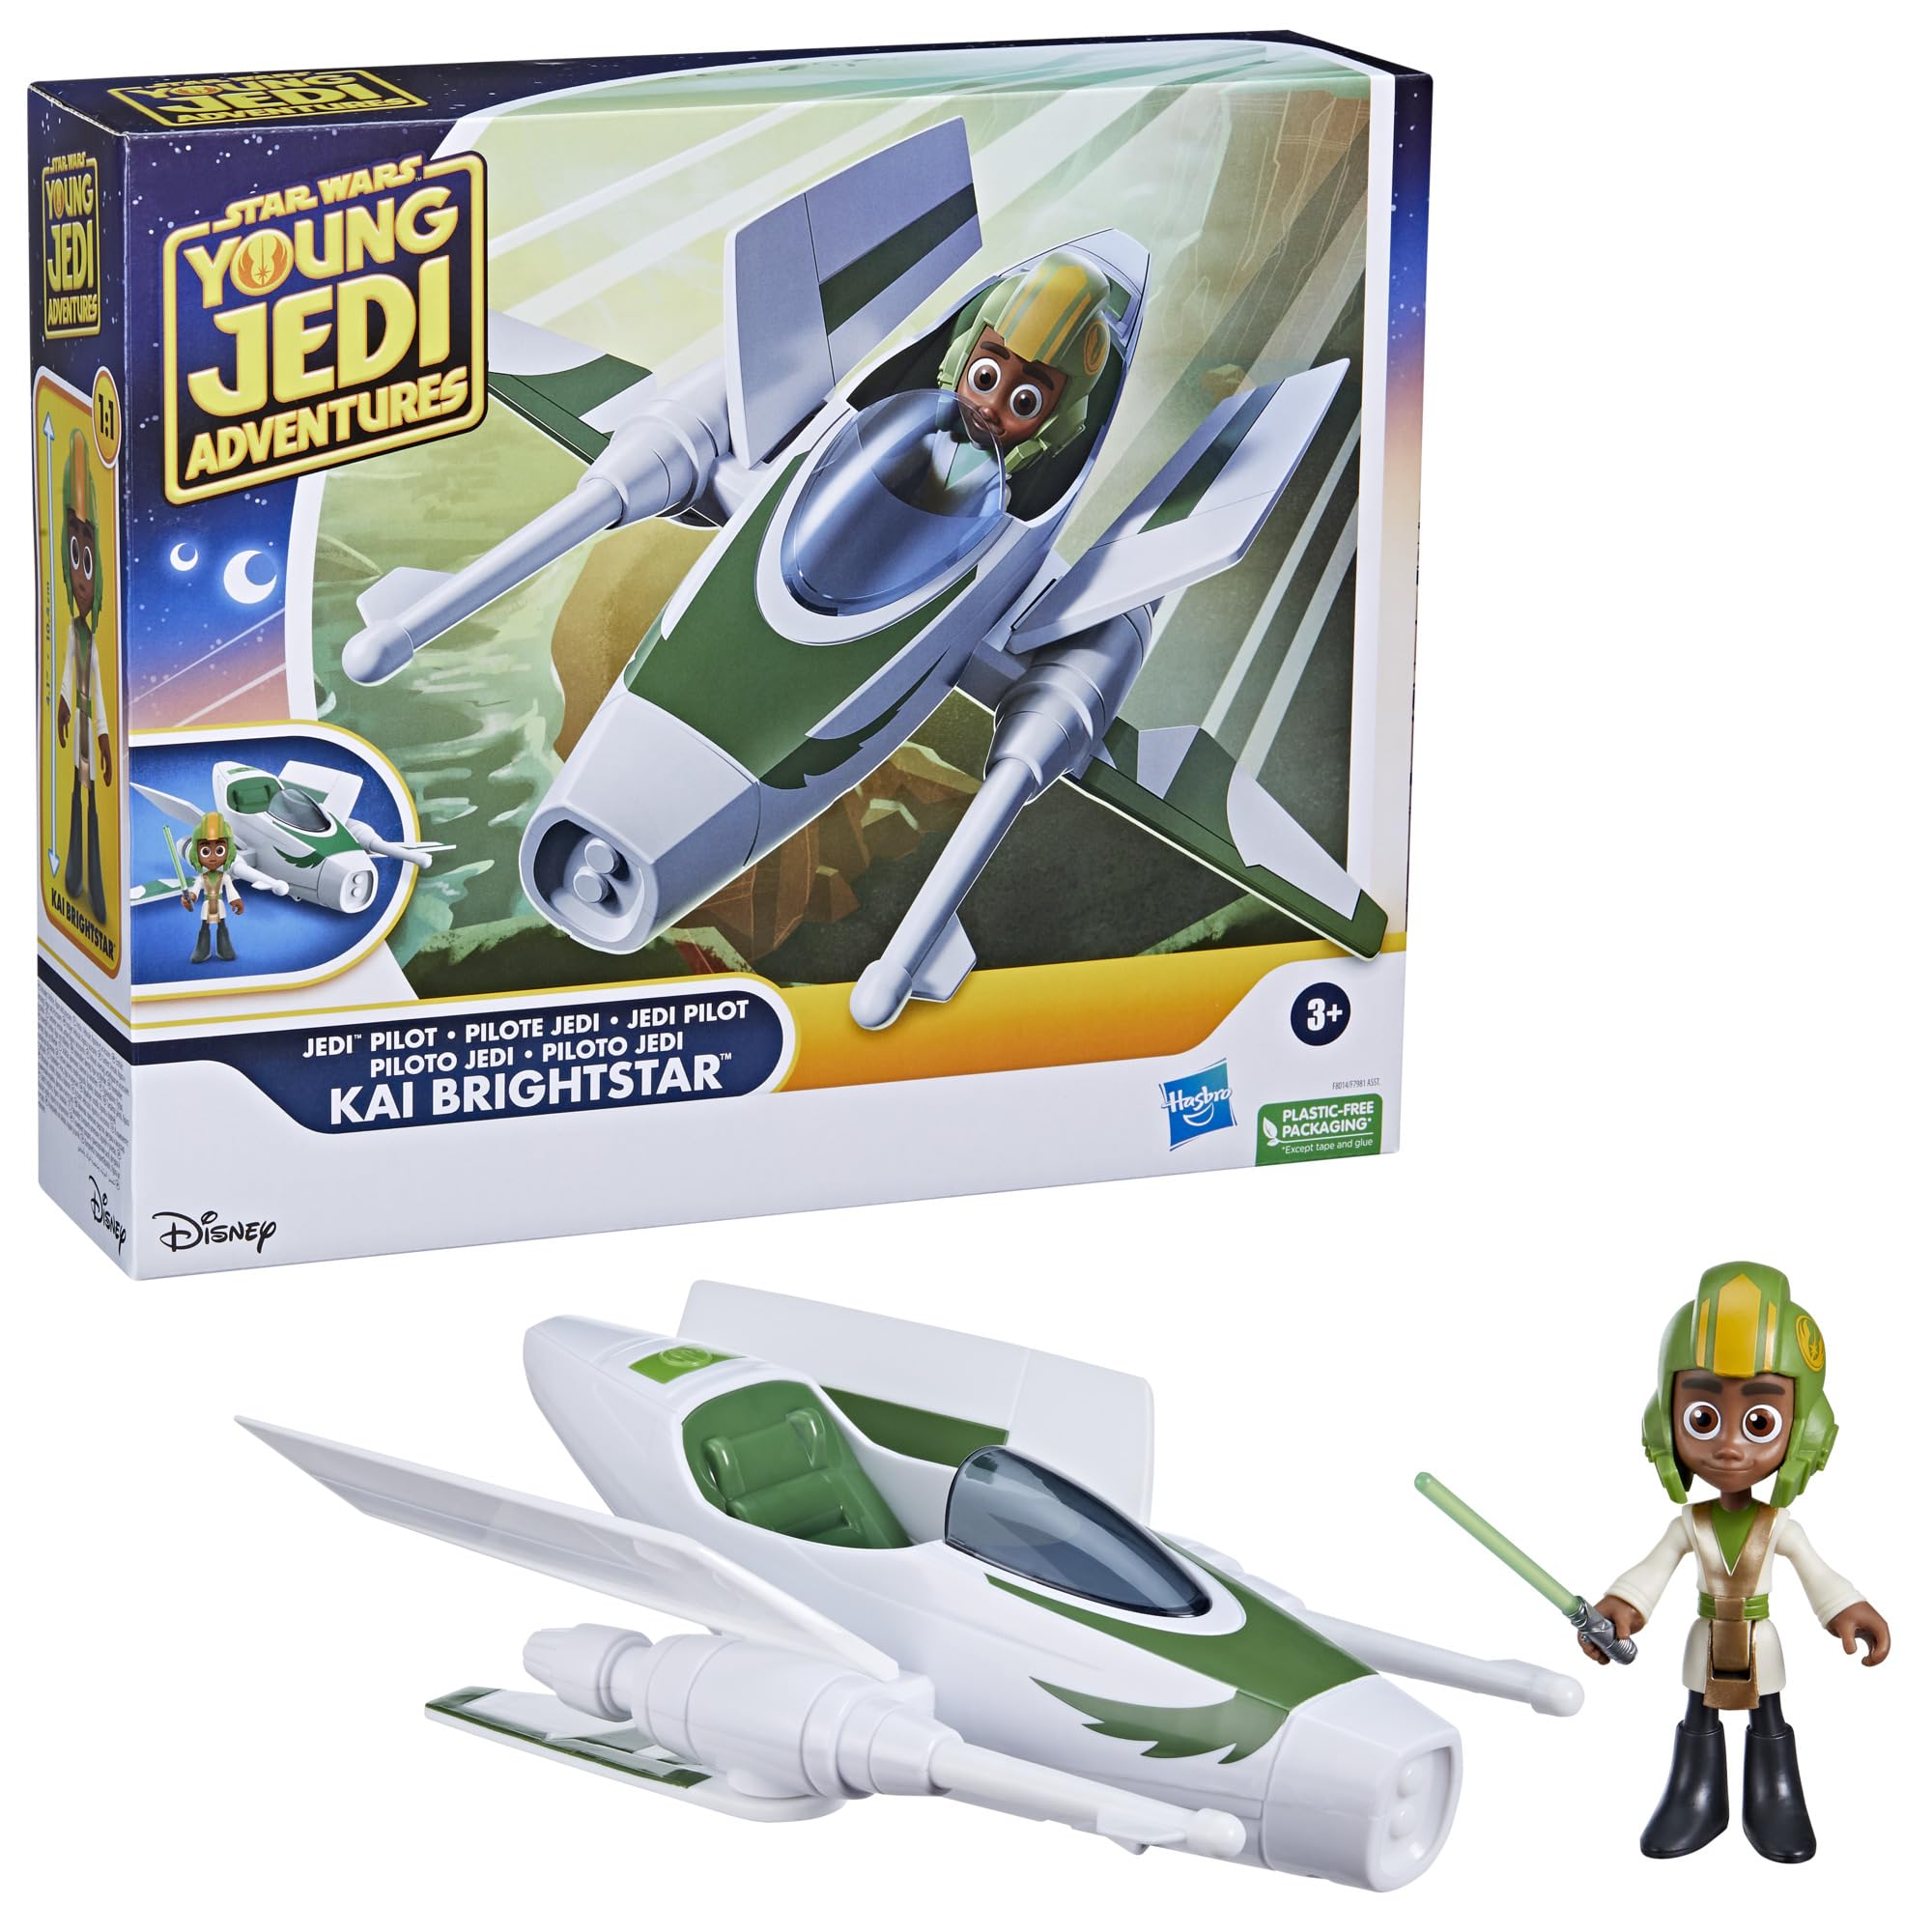 STAR WARS Jedi Pilot Kai Brightstar, 4-Inch Scale Action Figure & Star Wars Ship, Toys, Preschool Toys for 3 Year Old Boys & Girls